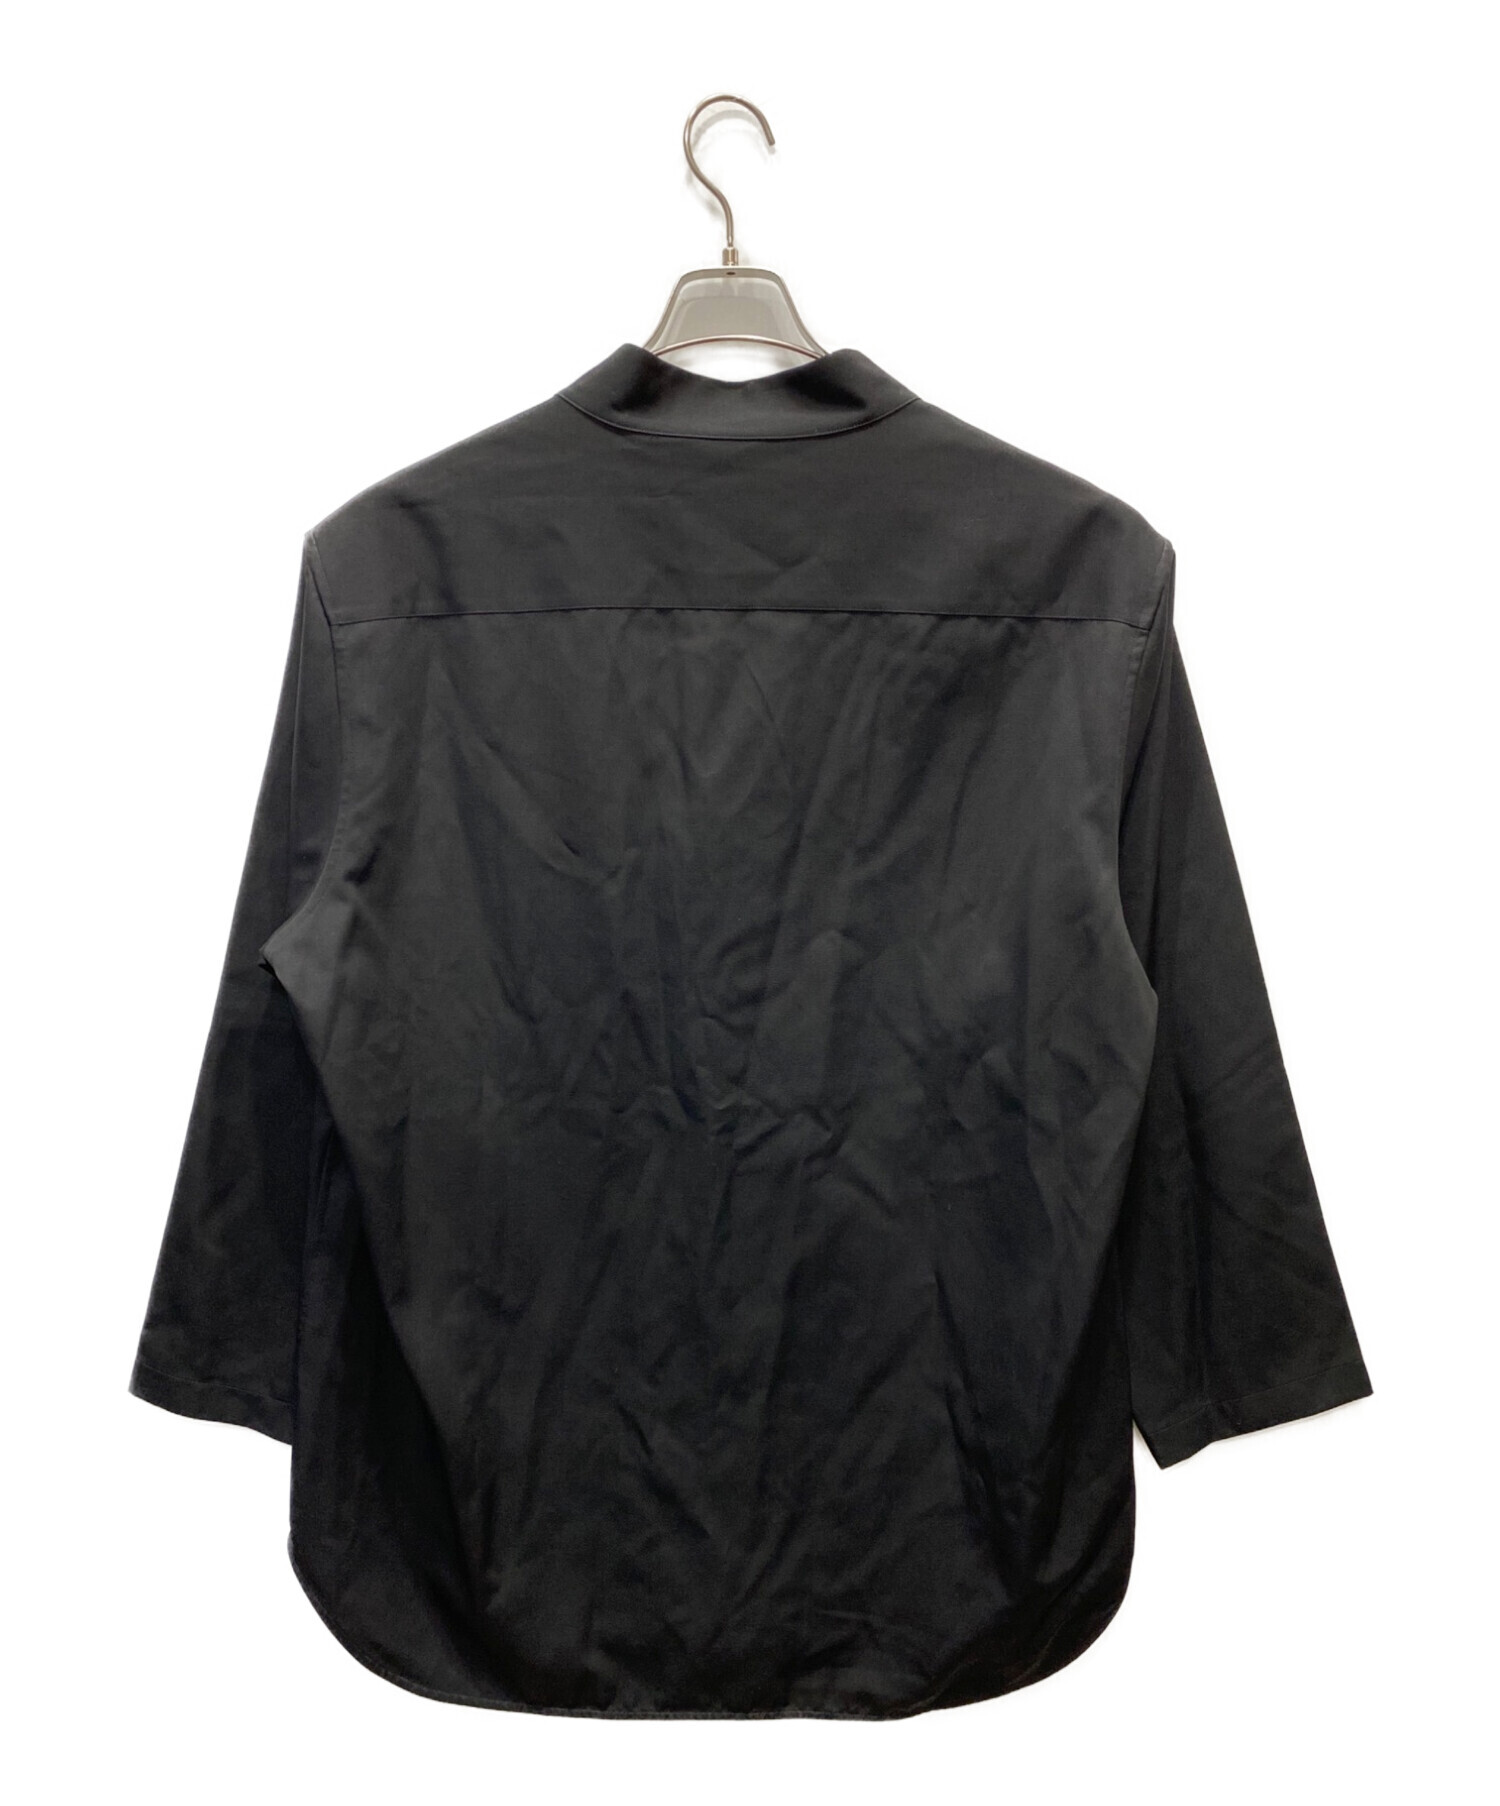 JIL SANDER (ジルサンダー) 着物カラーオーバーサイズシャツ ブラック サイズ:SIZE 42/16 1/2